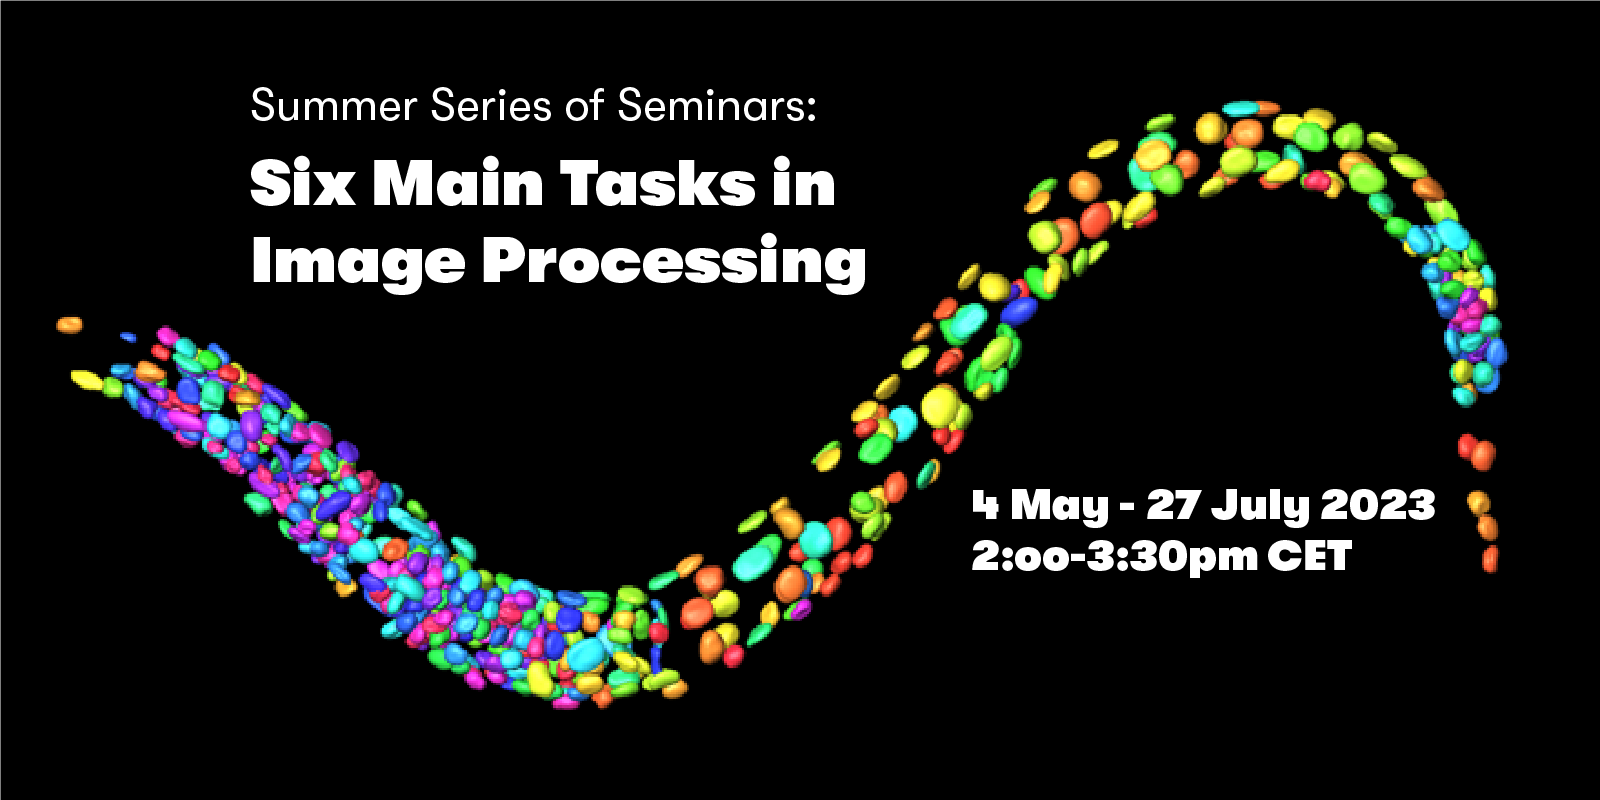 Decorative image; series of seminars on image processing